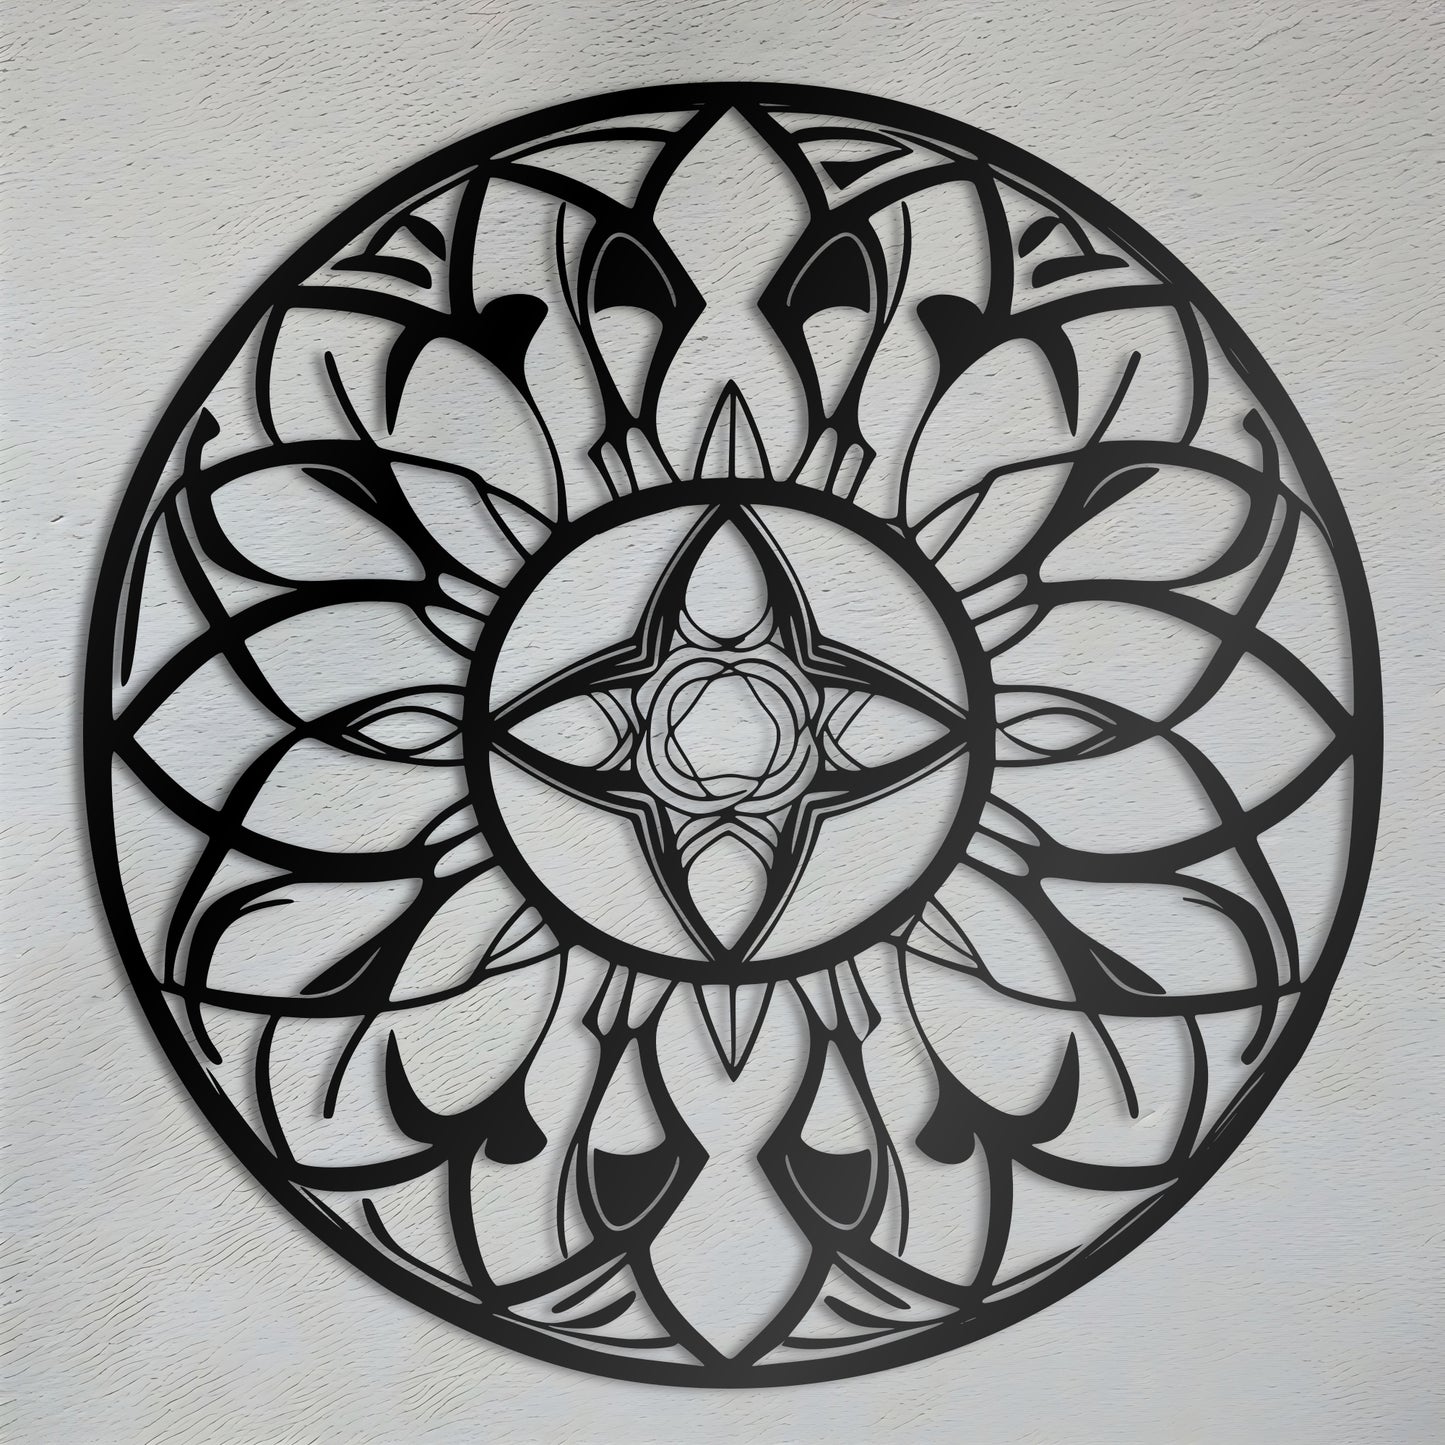 Mandala Wall Art - Symmetrical and Circular Design